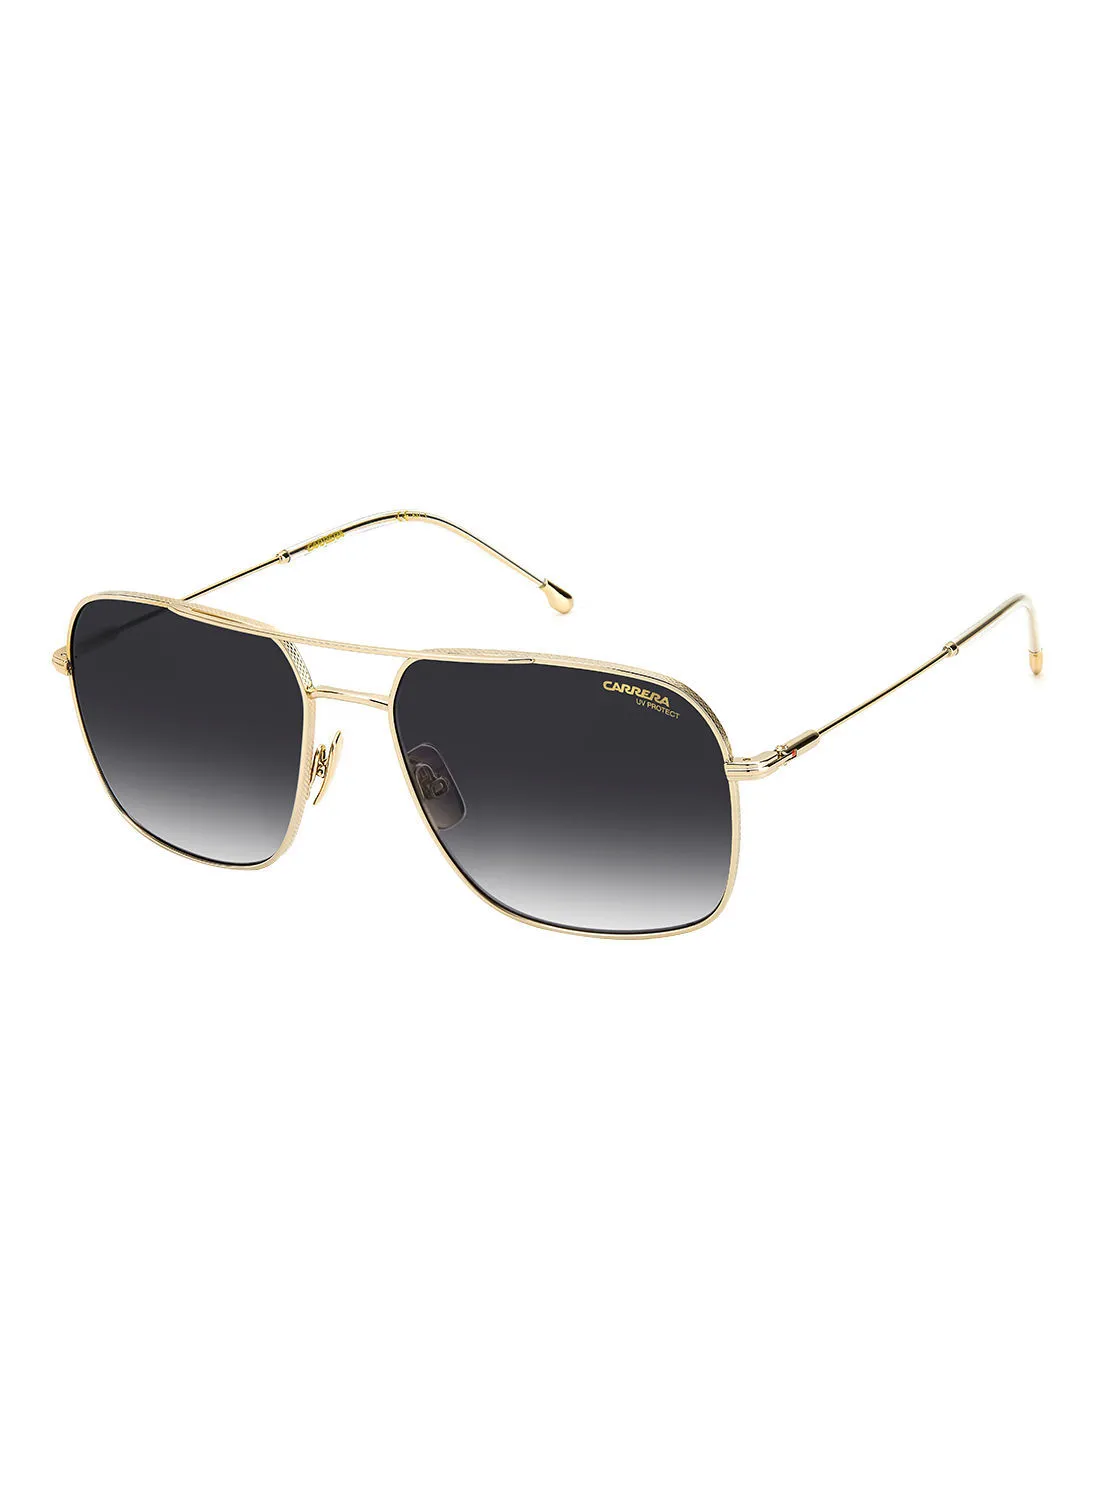 CARRERA UV Protection Navigator Eyewear Sunglasses CARRERA 247/S   GOLD GREY 58